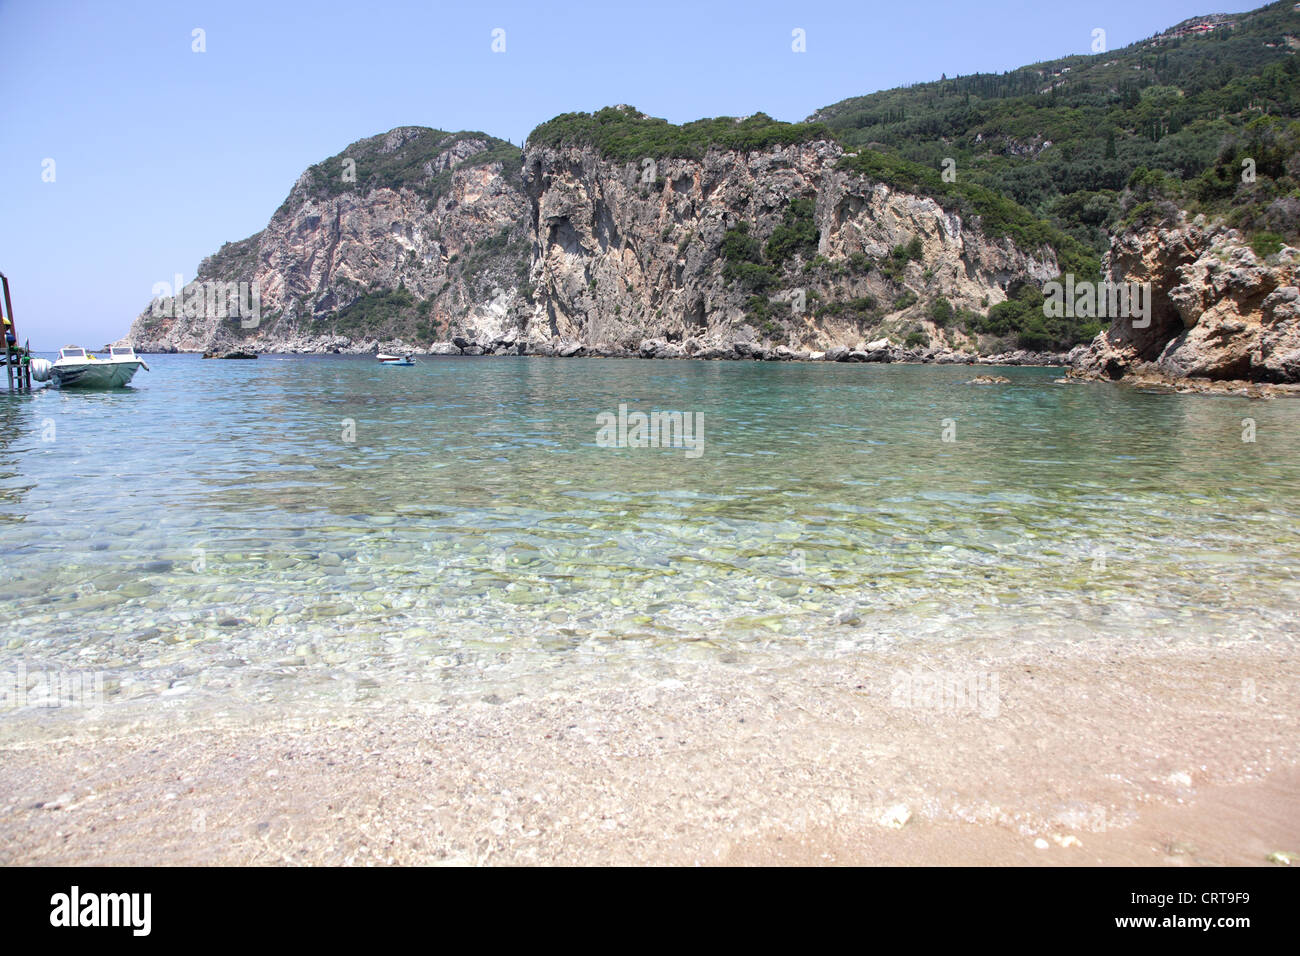 Skeloudi Bucht, Paleokastritsa, Korfu, Griechenland. Stockfoto